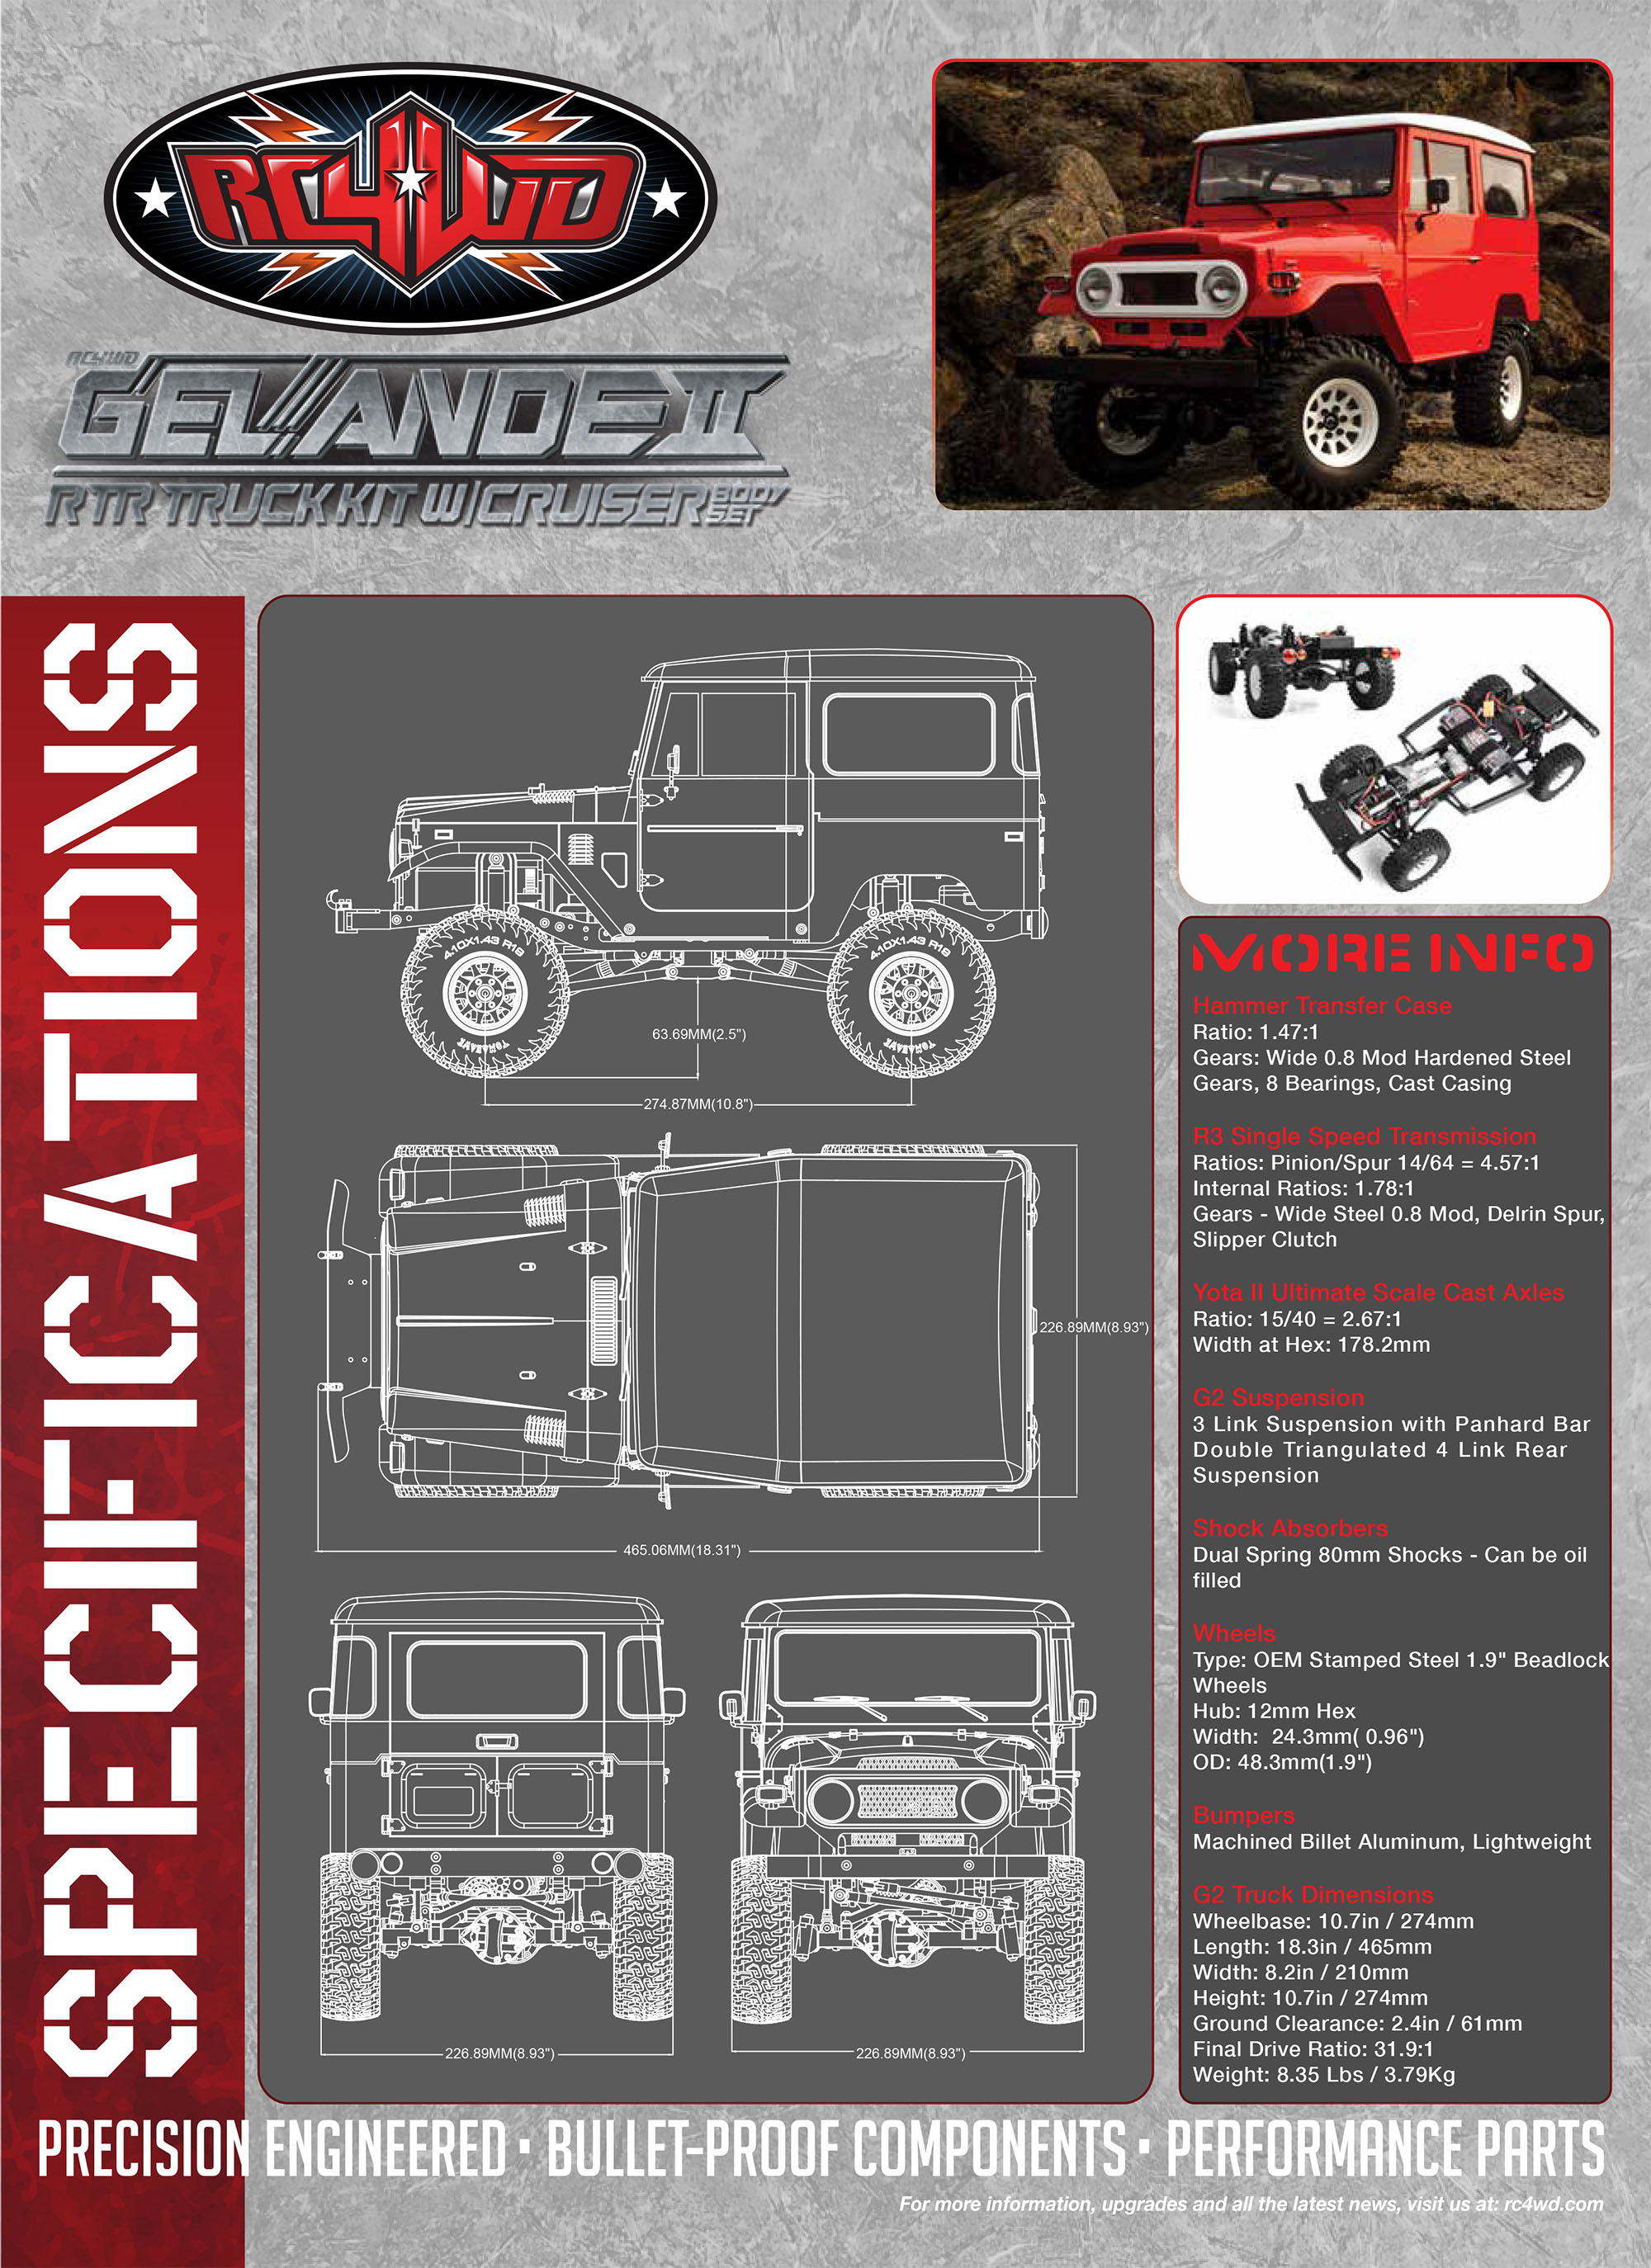 Toy Cruiser corpo Emblema Set per Gelande G2 INOX II RC4WD Z-S1714 RC 